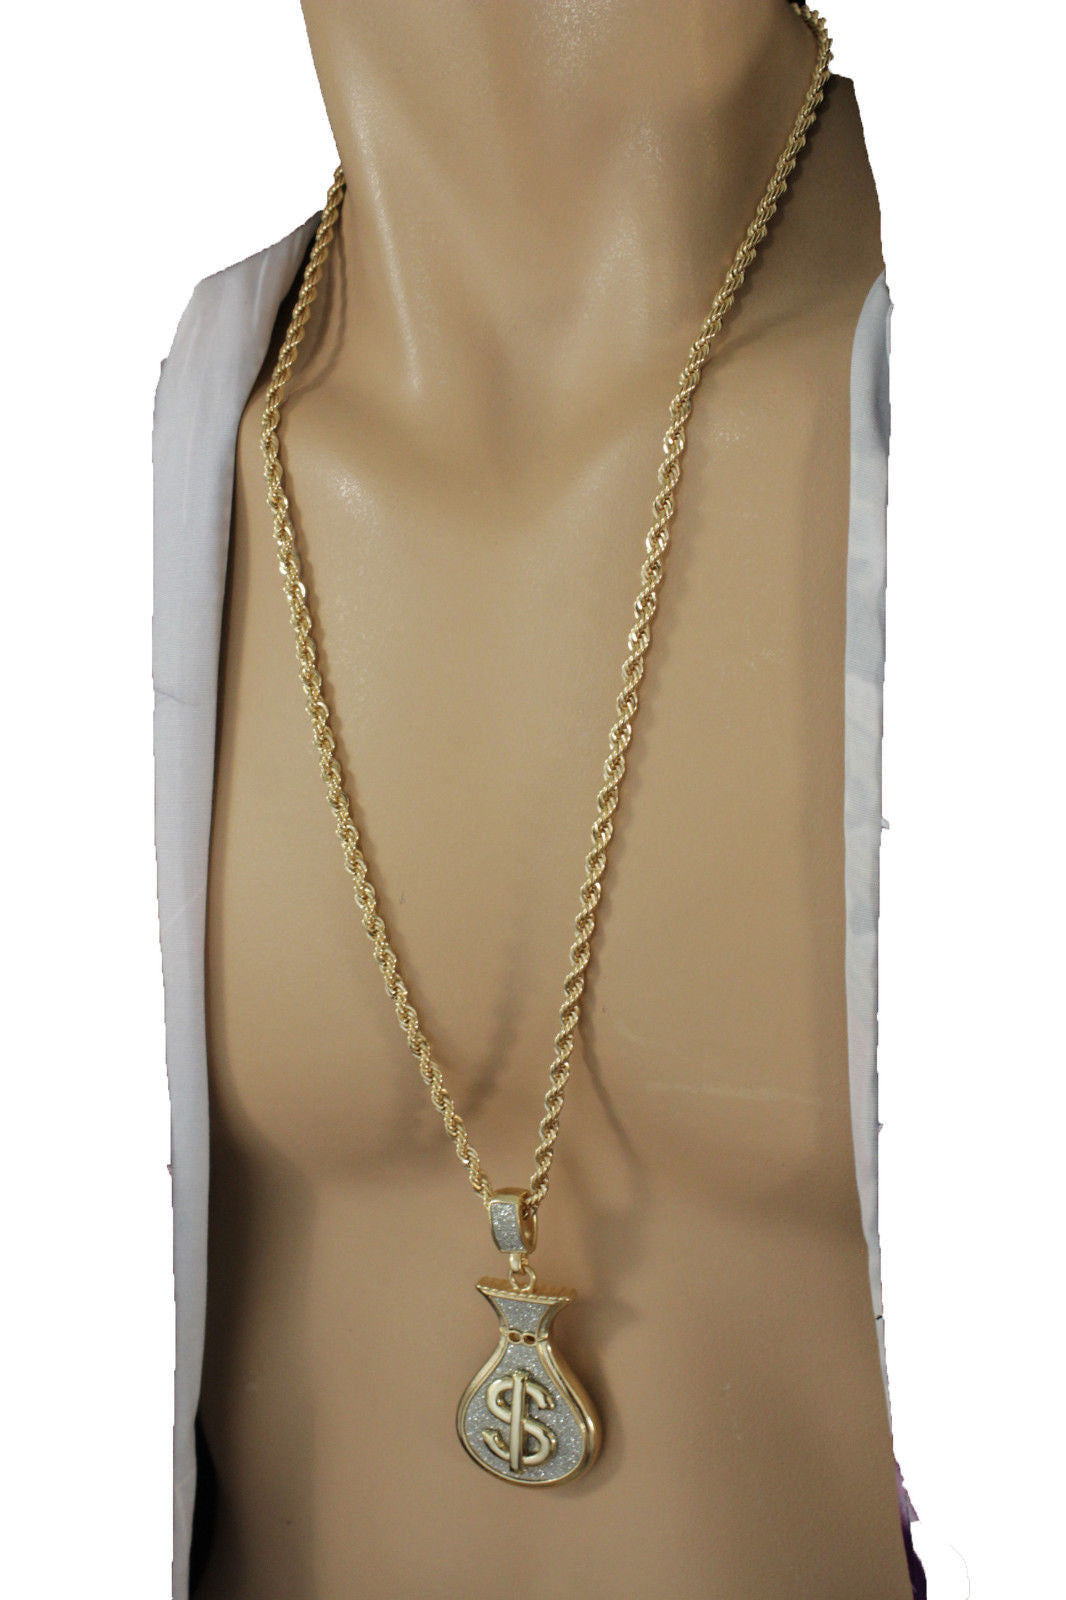 bag charm necklace